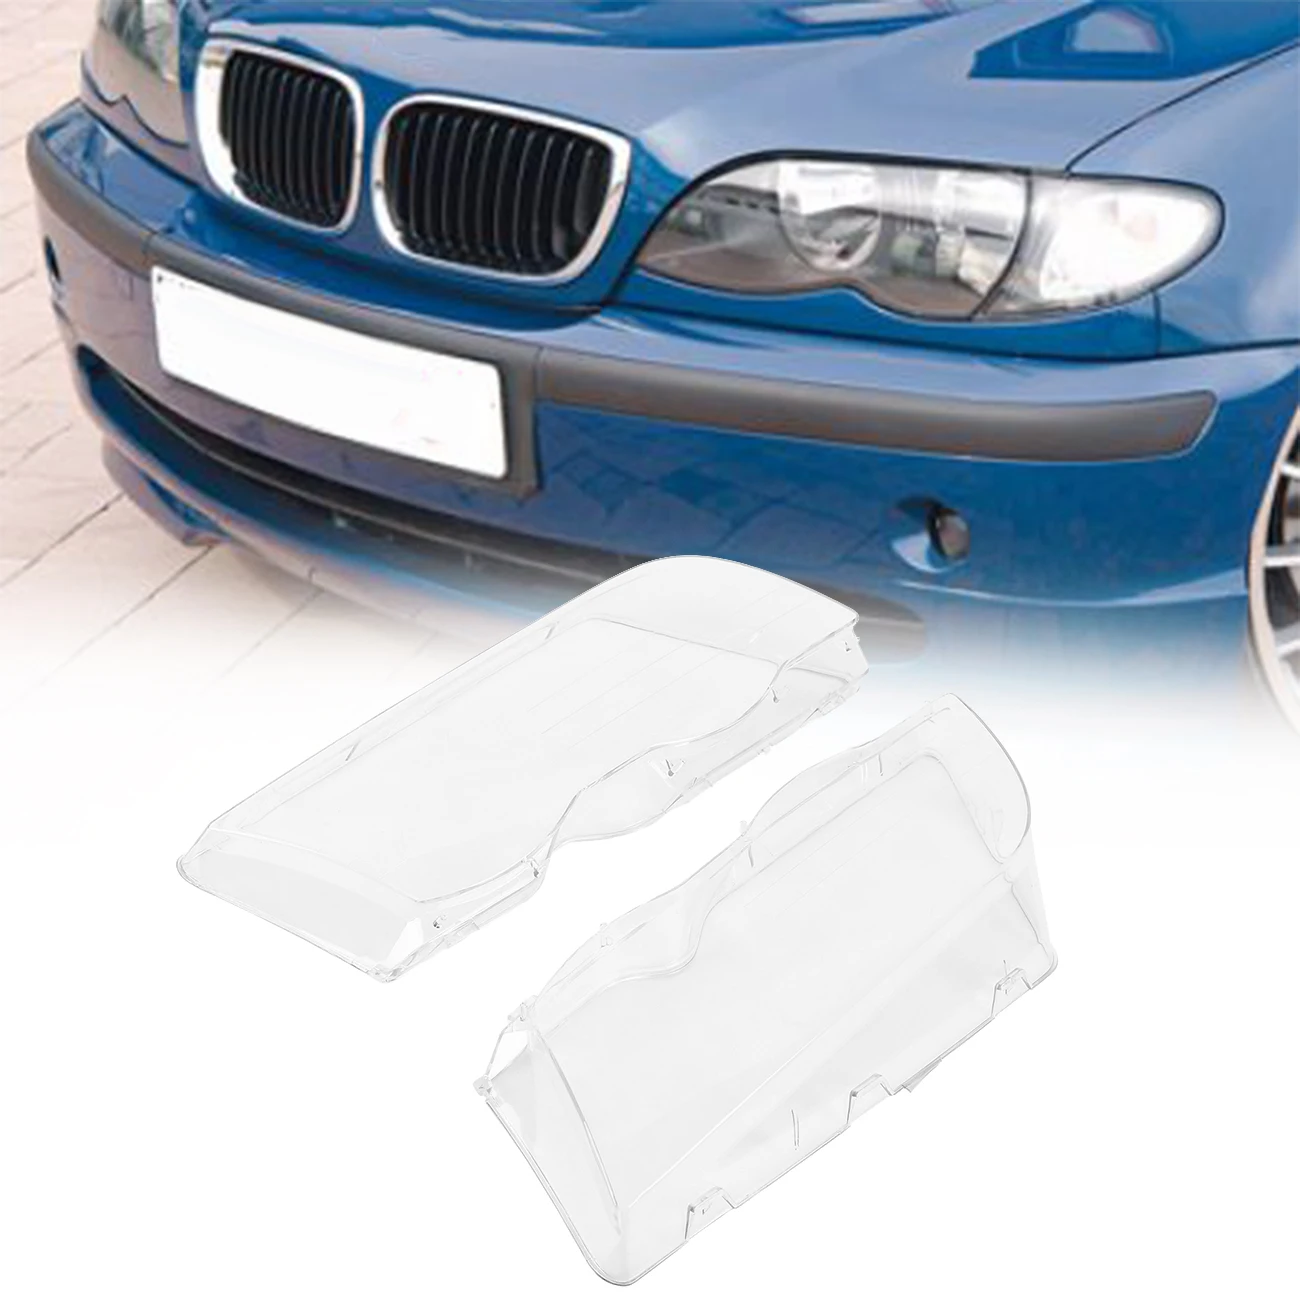 Samger-cubierta de cristal para faros delanteros de coche, lente transparente para BMW E46 serie 3, 1998-2001, 4 puertas, 1 par